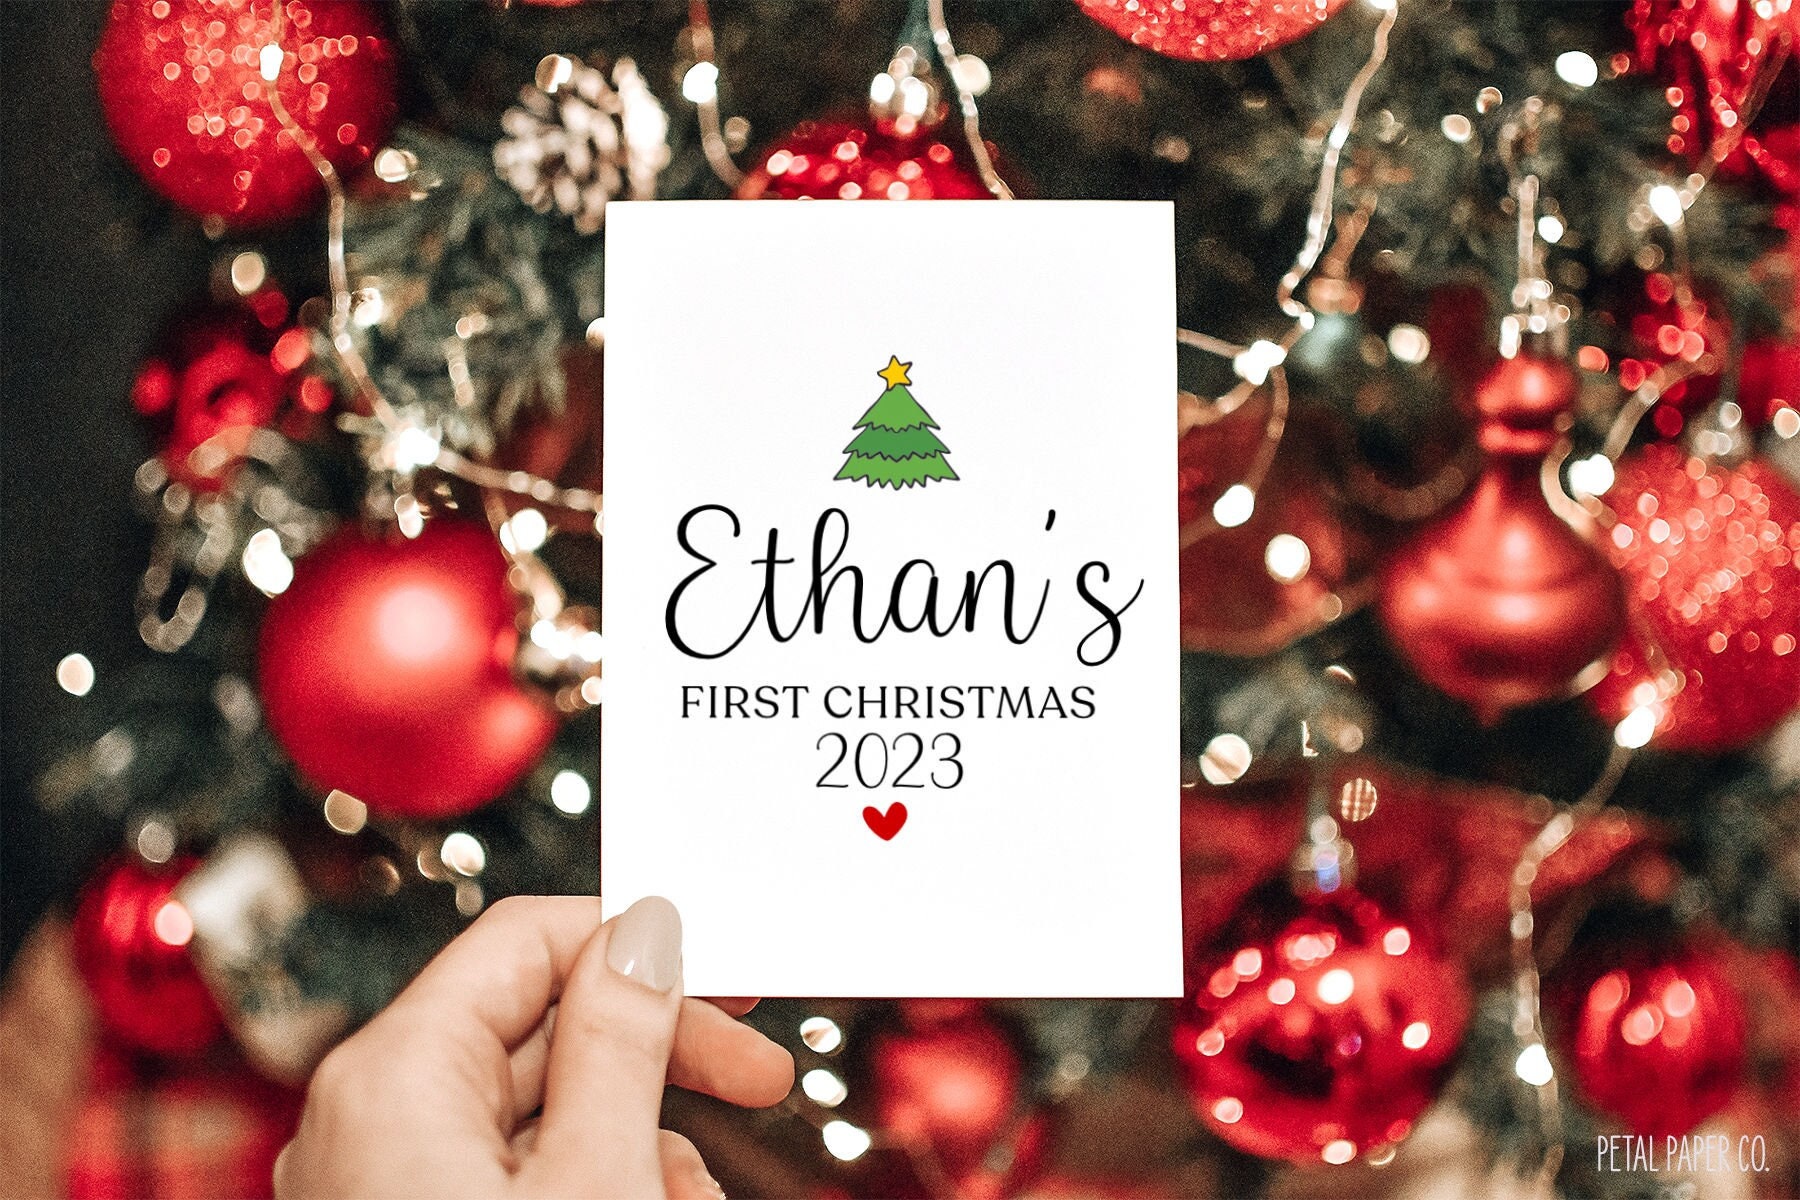 Baby First Christmas Card, Christmas Print Card, Holiday Card